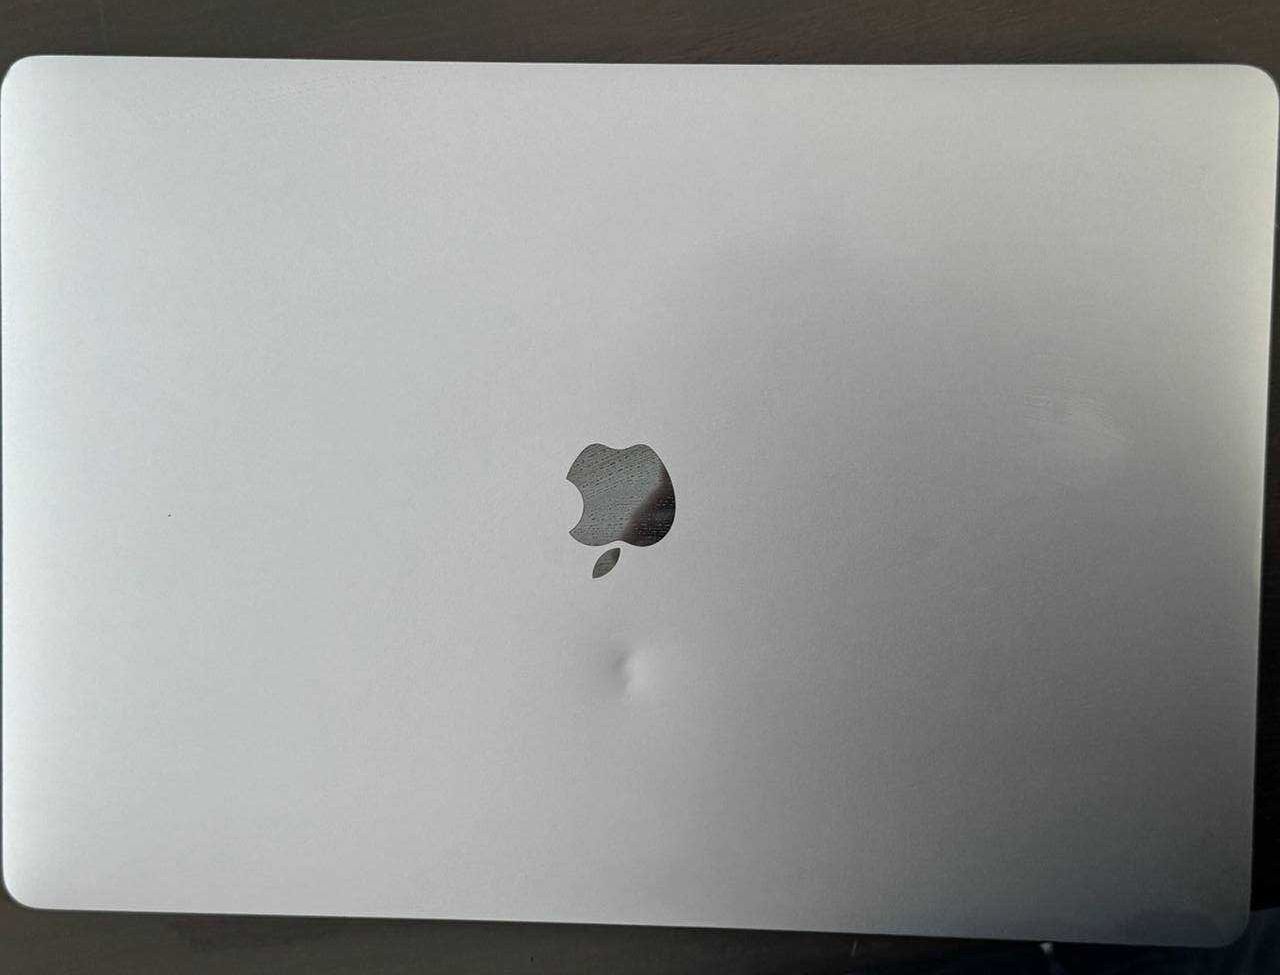 Srochna MacBook Pro Core I-9 Xotira 1TB